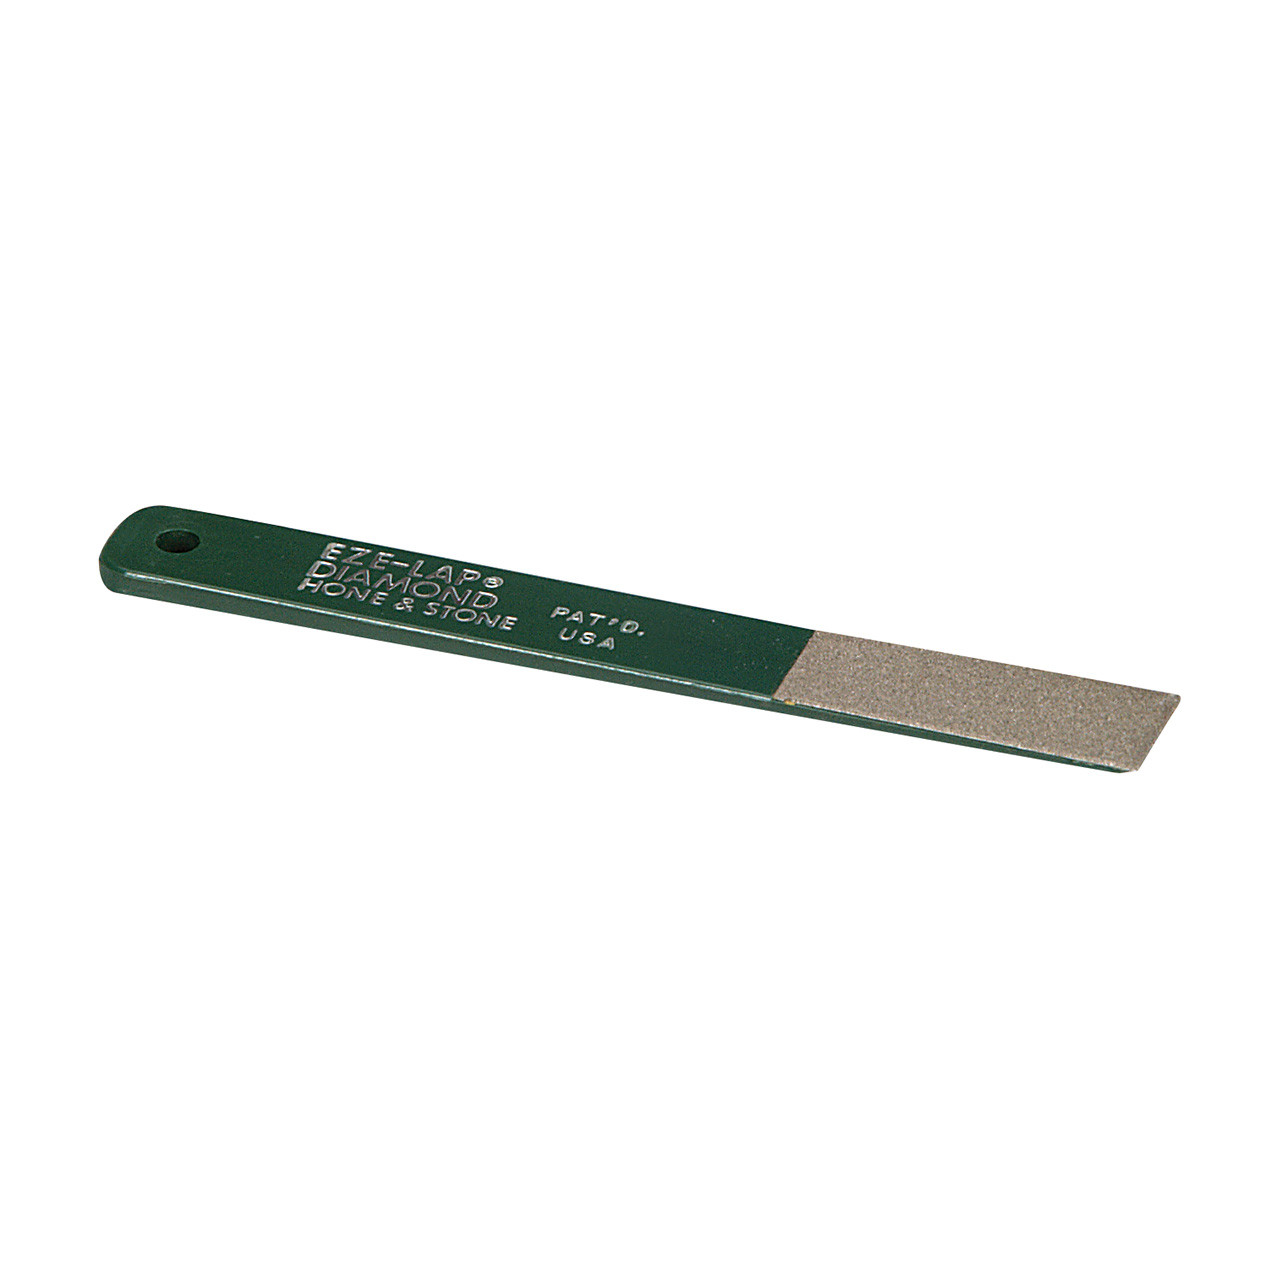 EZE-LAP® Diamond Hand Lappers - Extra-Coarse (Green)